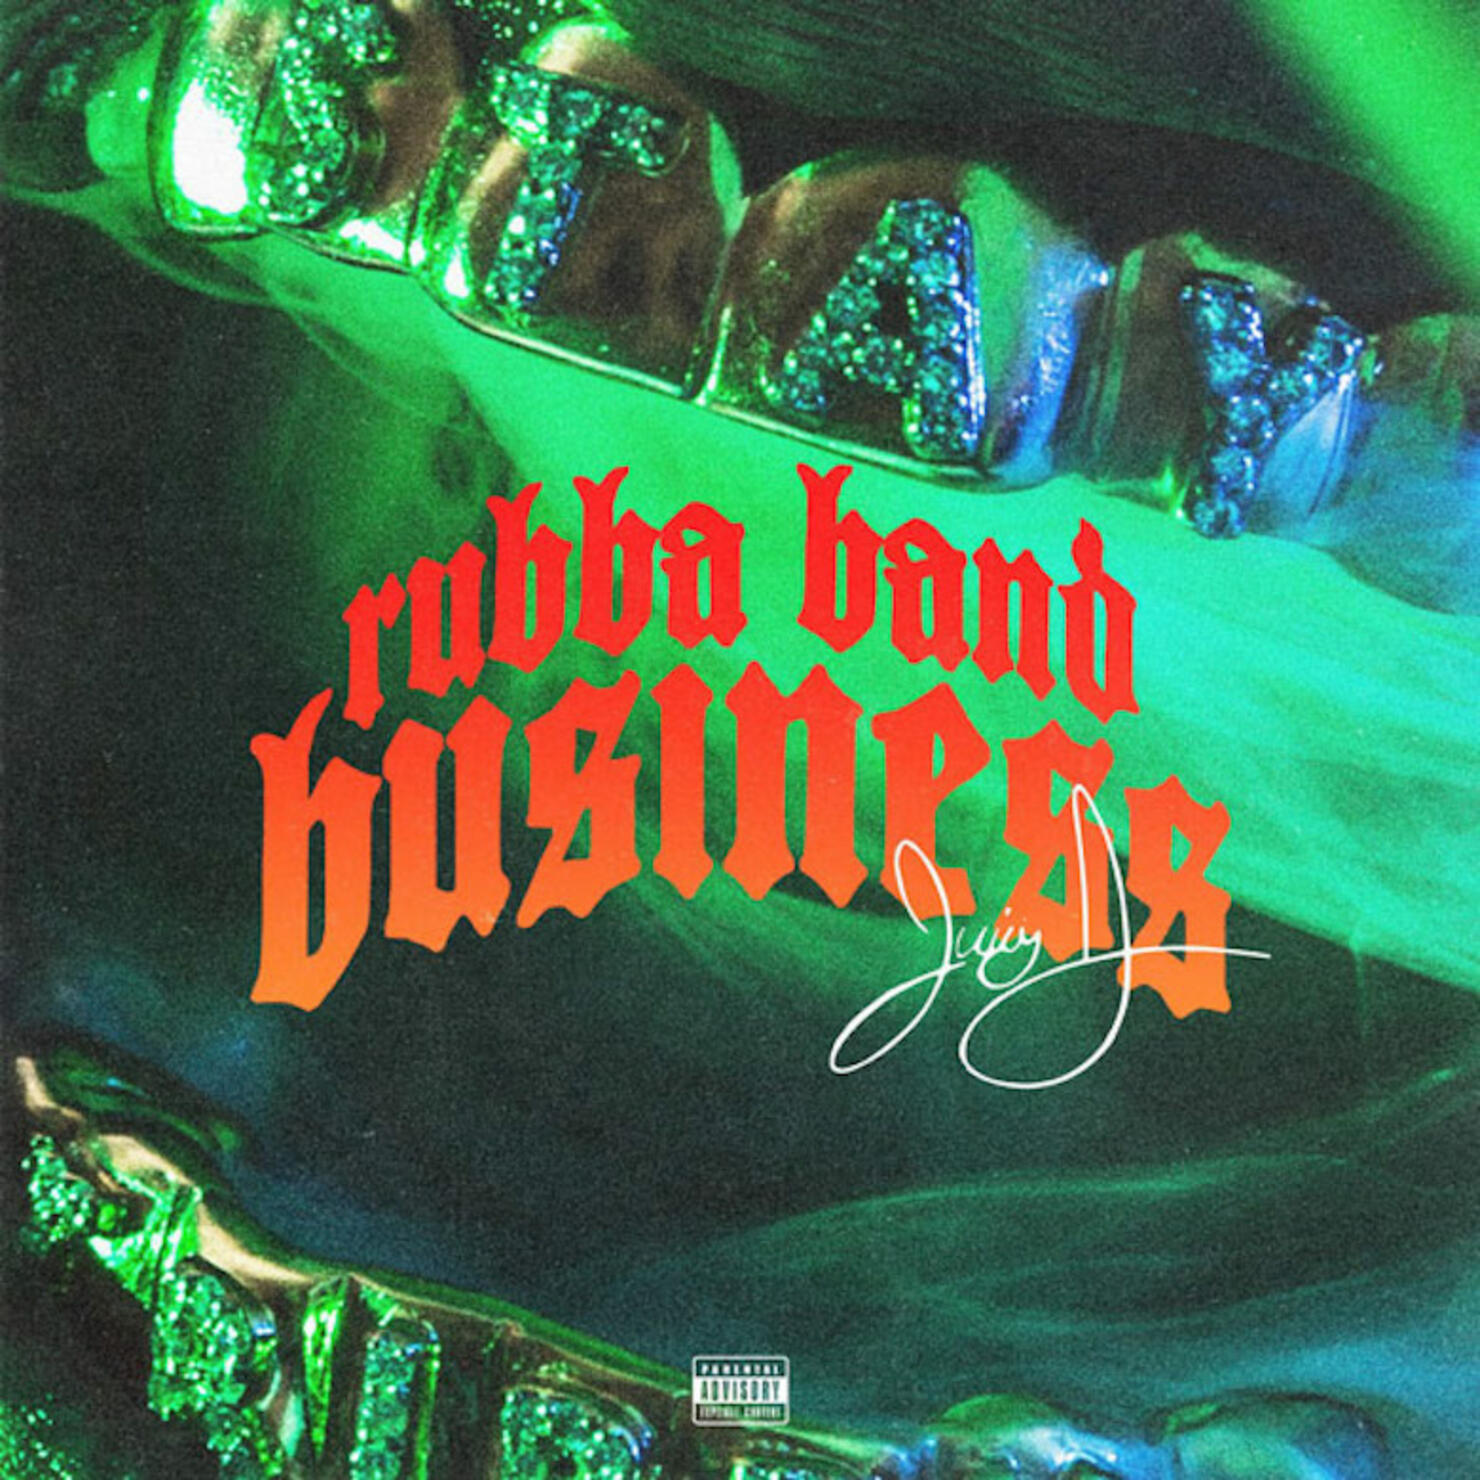 Juicy J - 'Rubba Band Business'